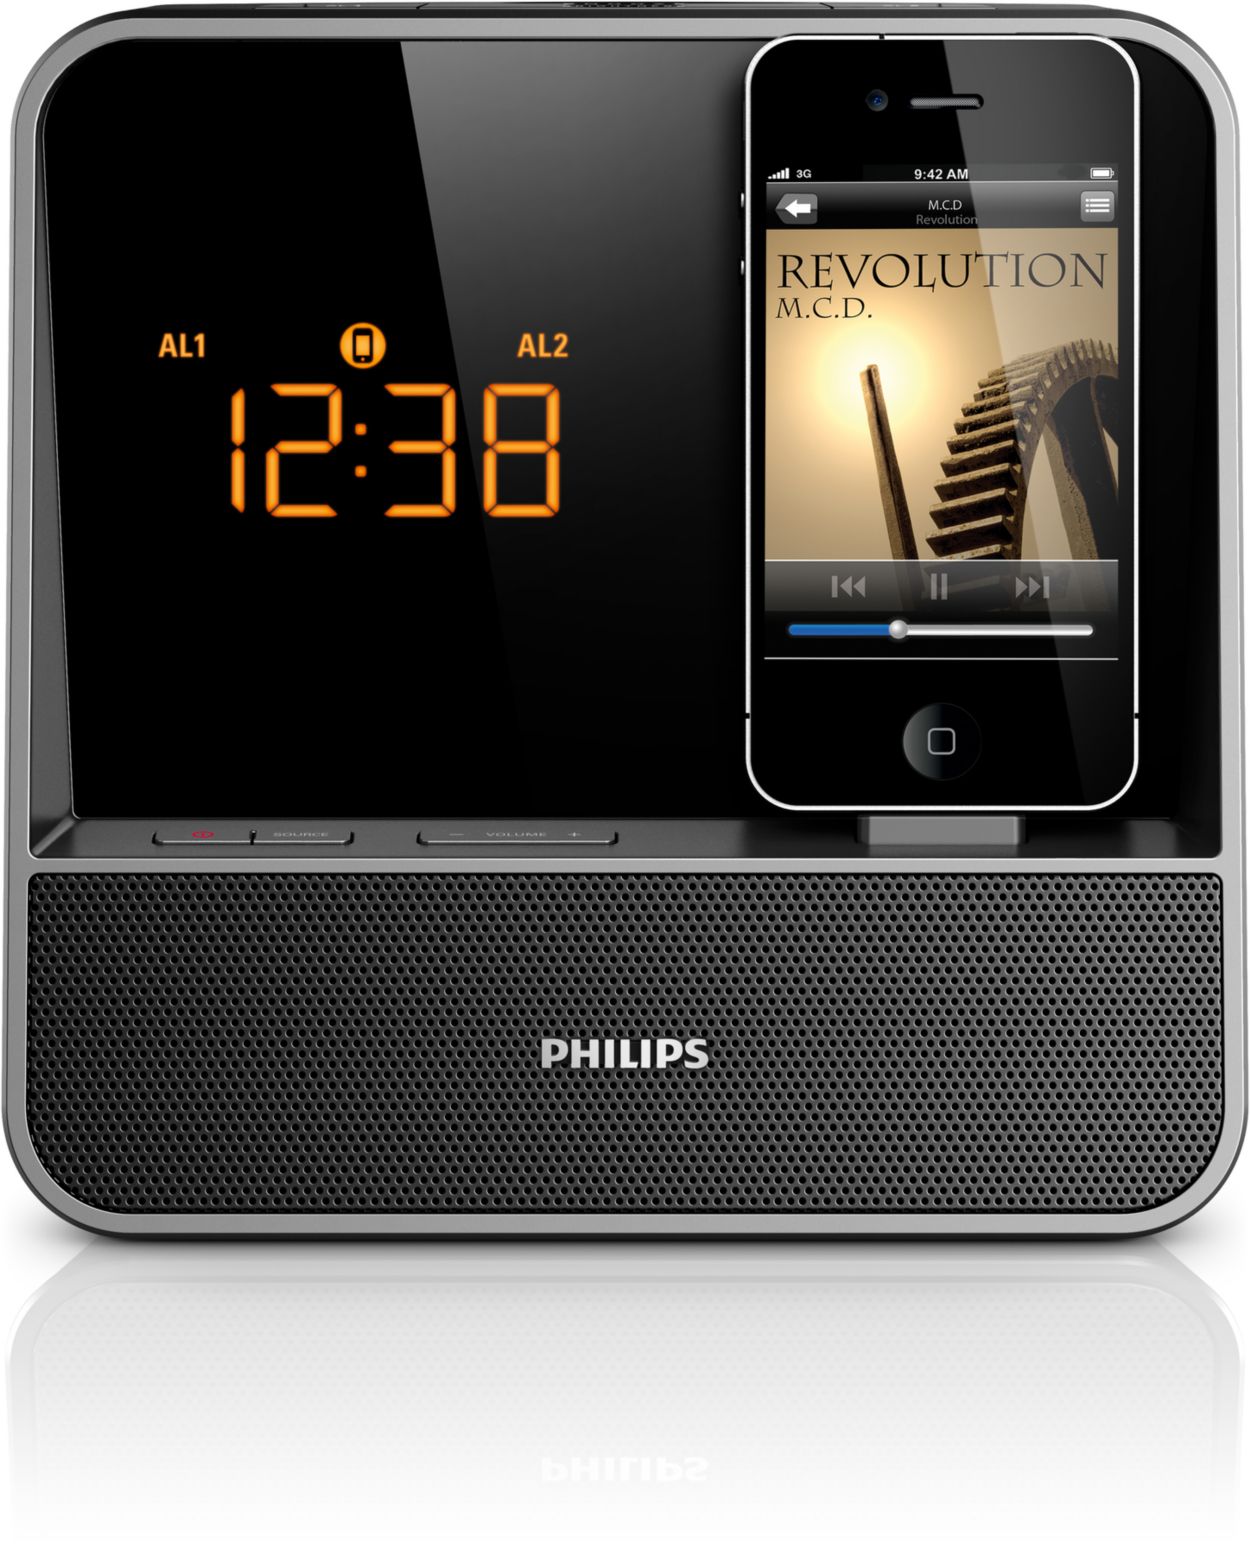 PHILIPS Radio reveil Philips avec dock iPhone et ipod affichage